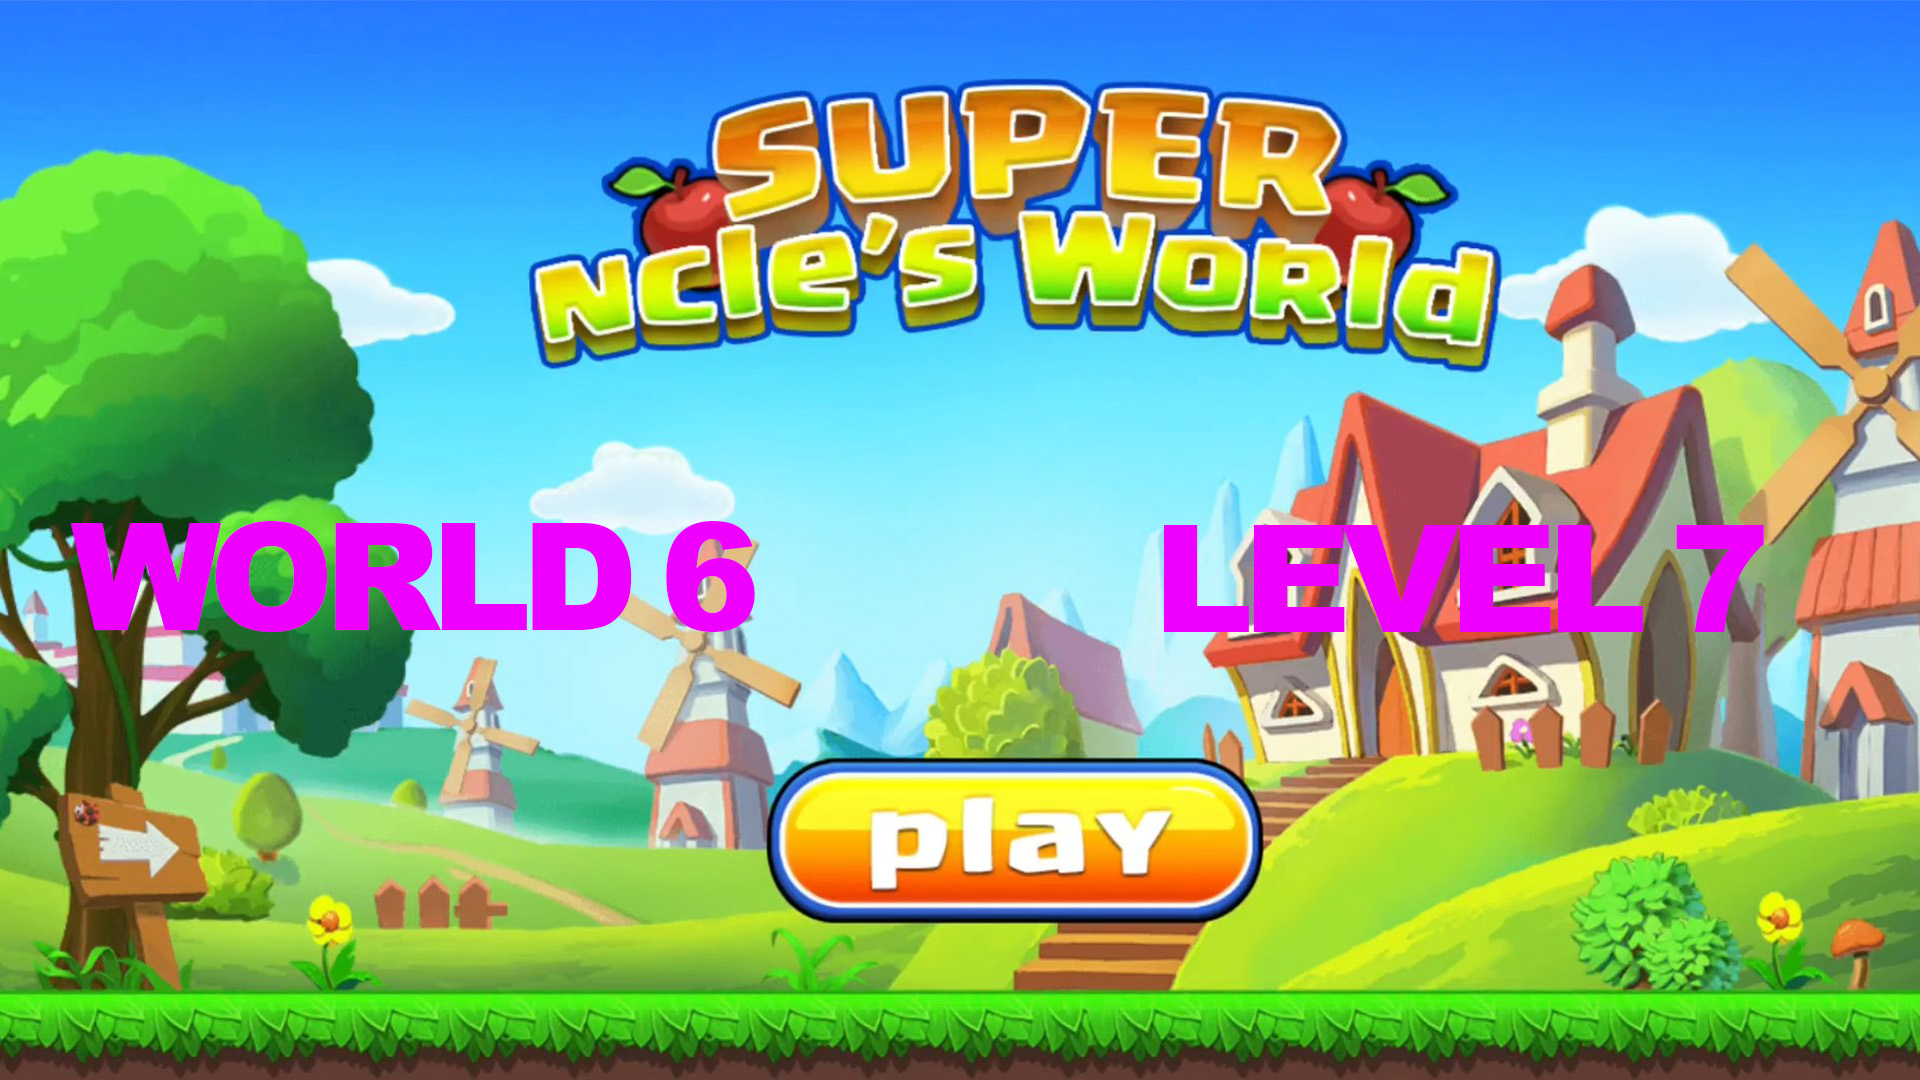 Super ncle's  World 6. Level 7.